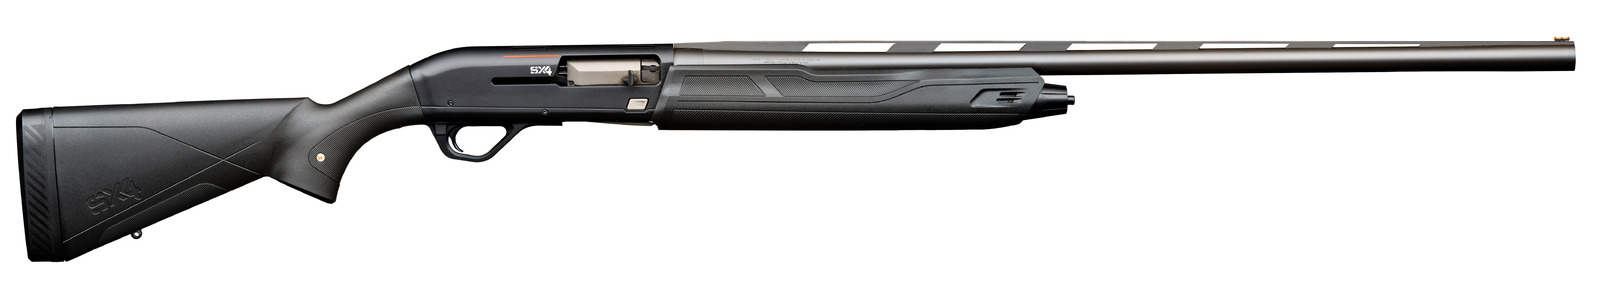 Winchester SX4 Composite Black Shadow